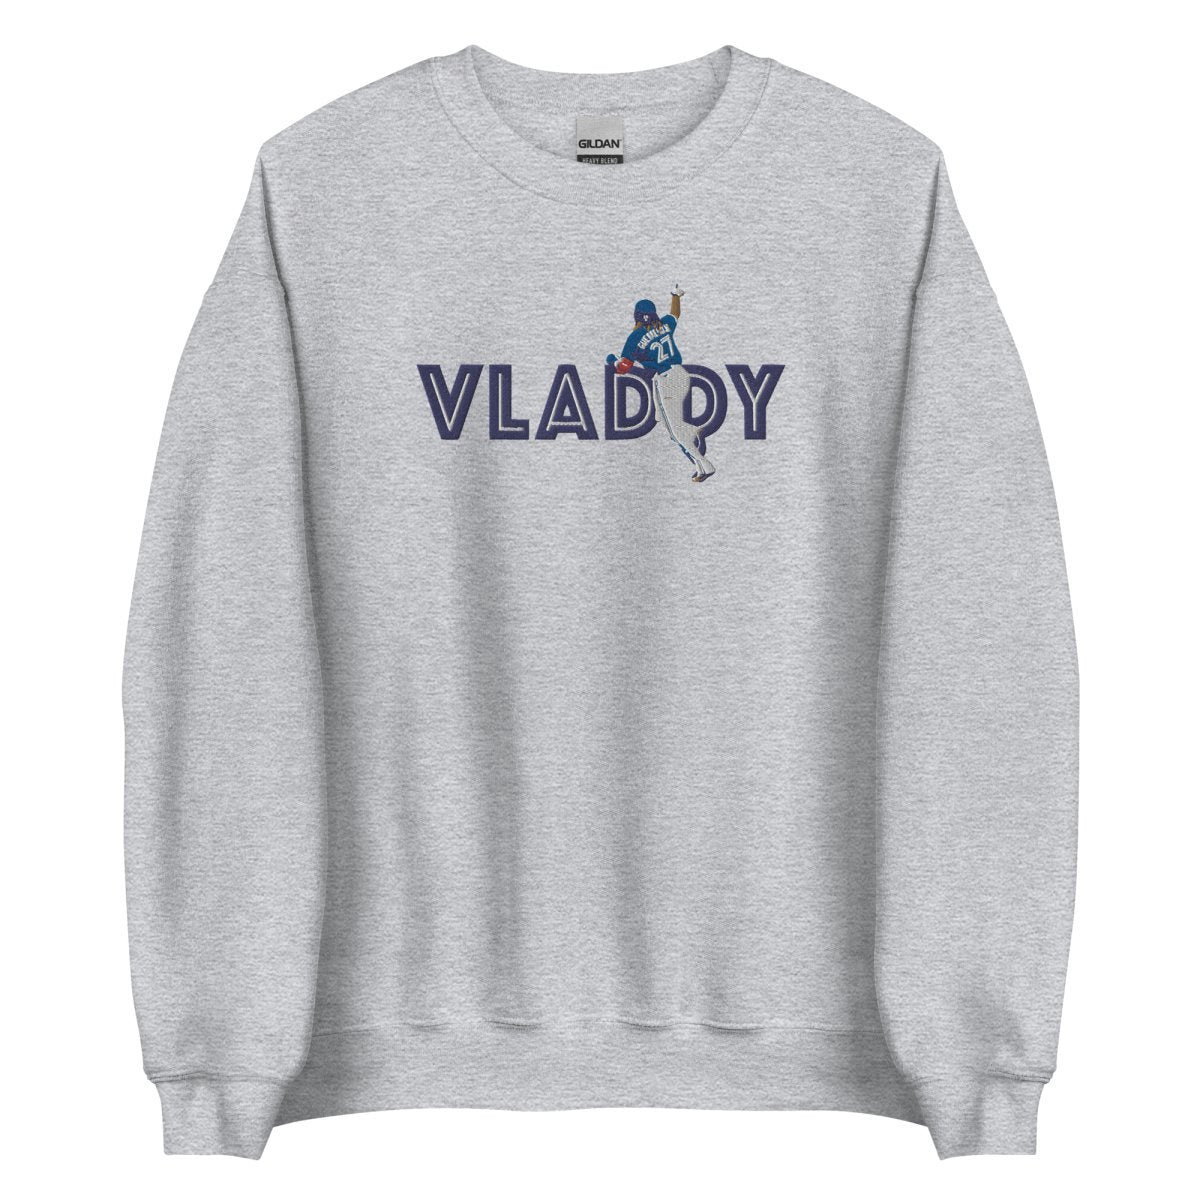 Vladdy Jr. Embroidered Unisex Sweatshirt - Leveled Up Labels